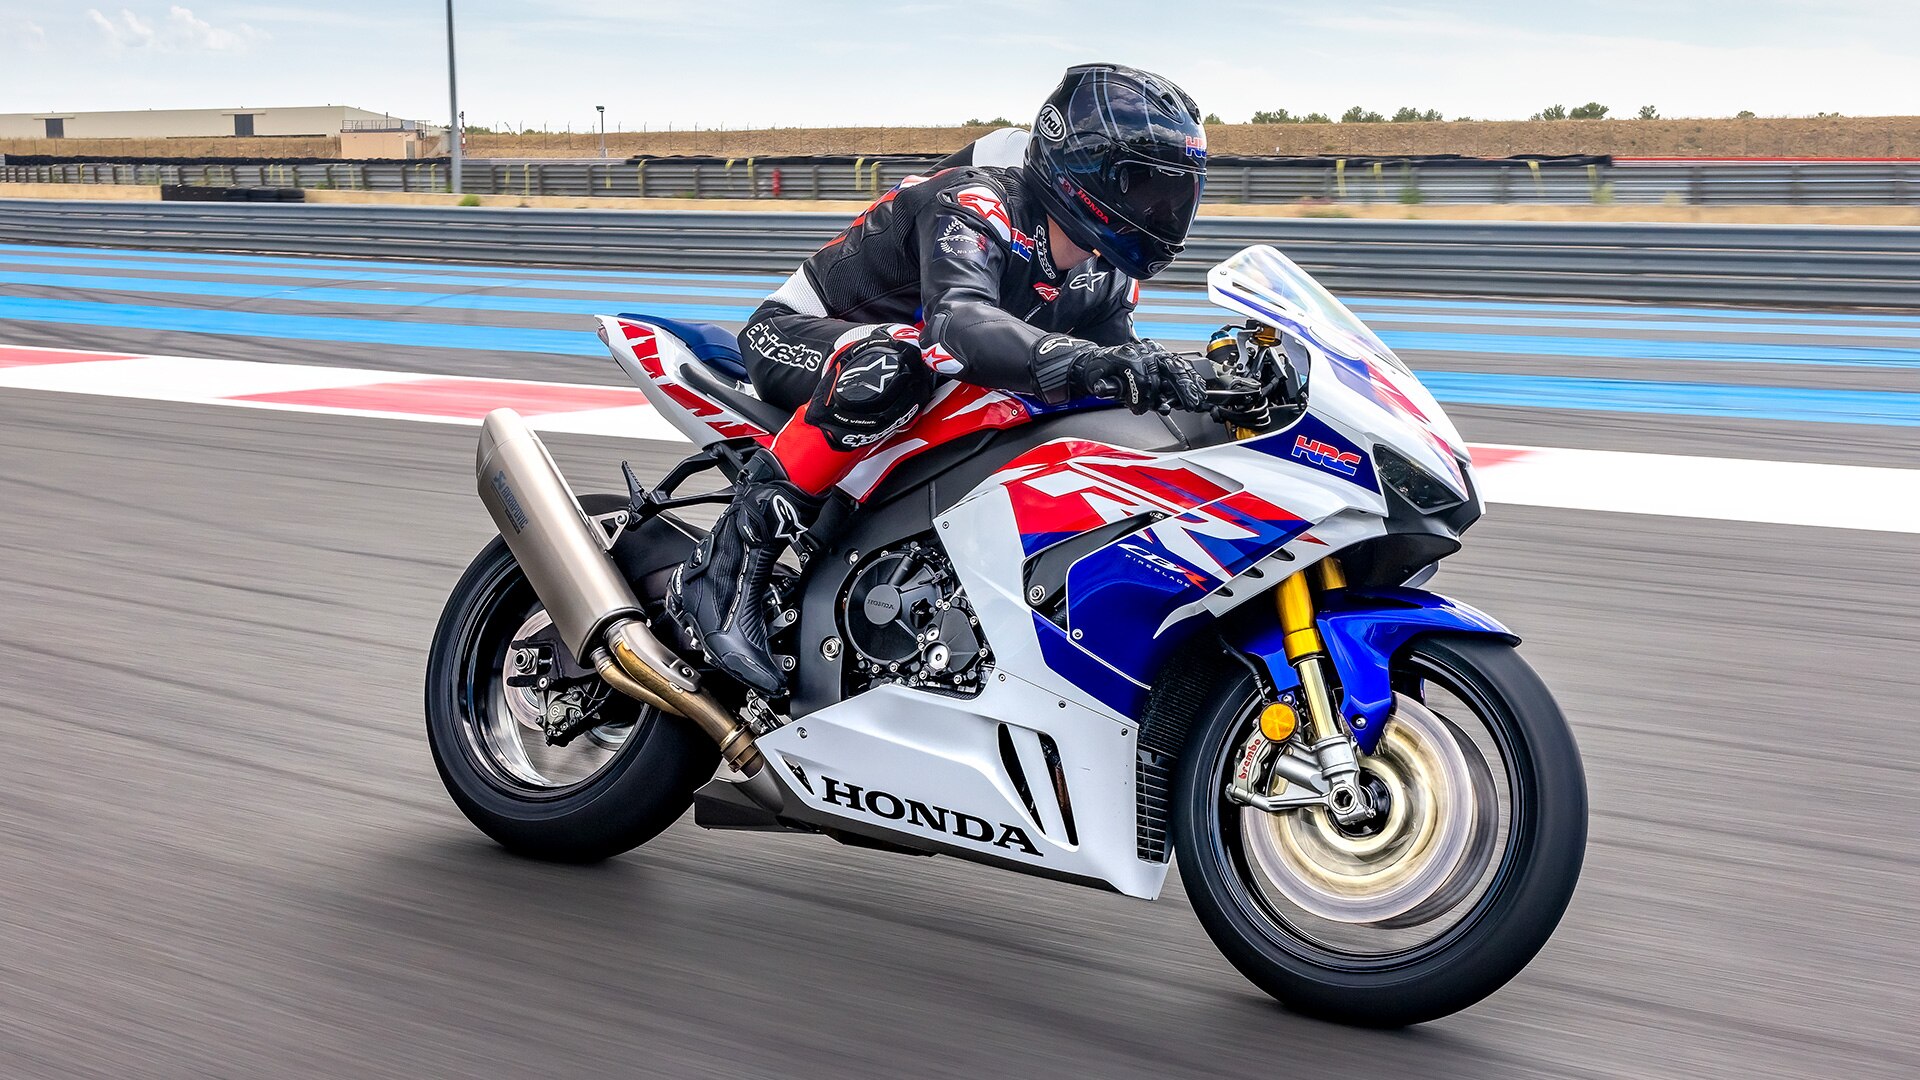 Honda CBR1000RR-R Fireblade SP 2022. Motocycliste sur la piste de course.